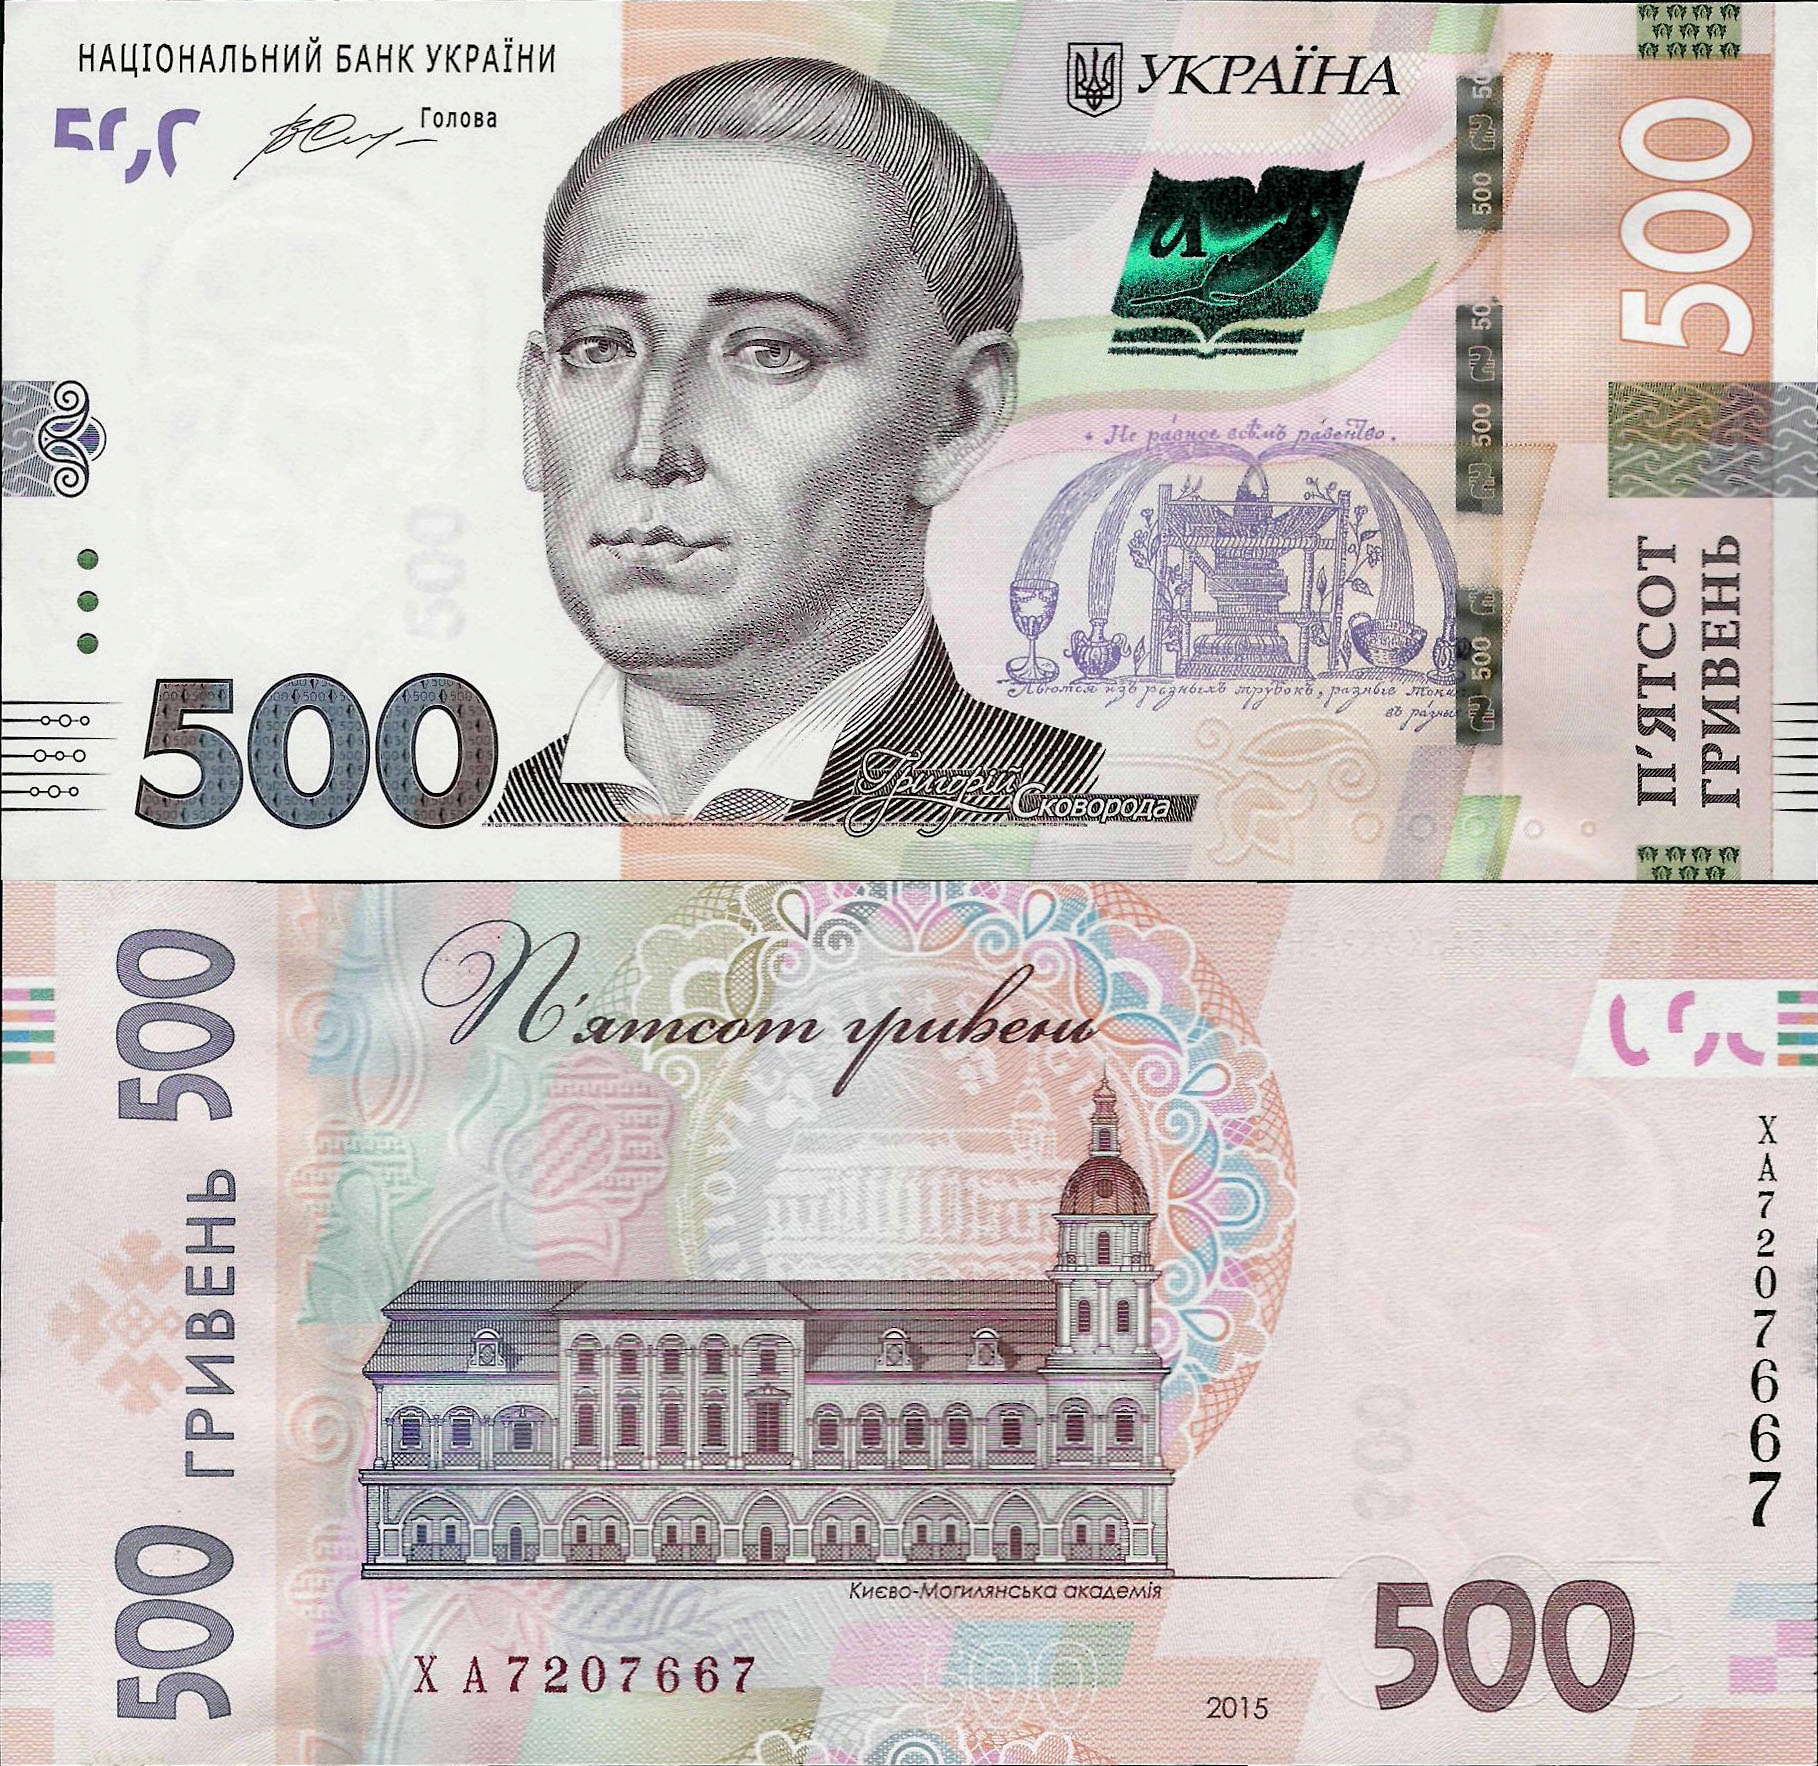 5000 гривен в рублях. Банкнота Украины 500 гривен. 500 Гривен купюра.